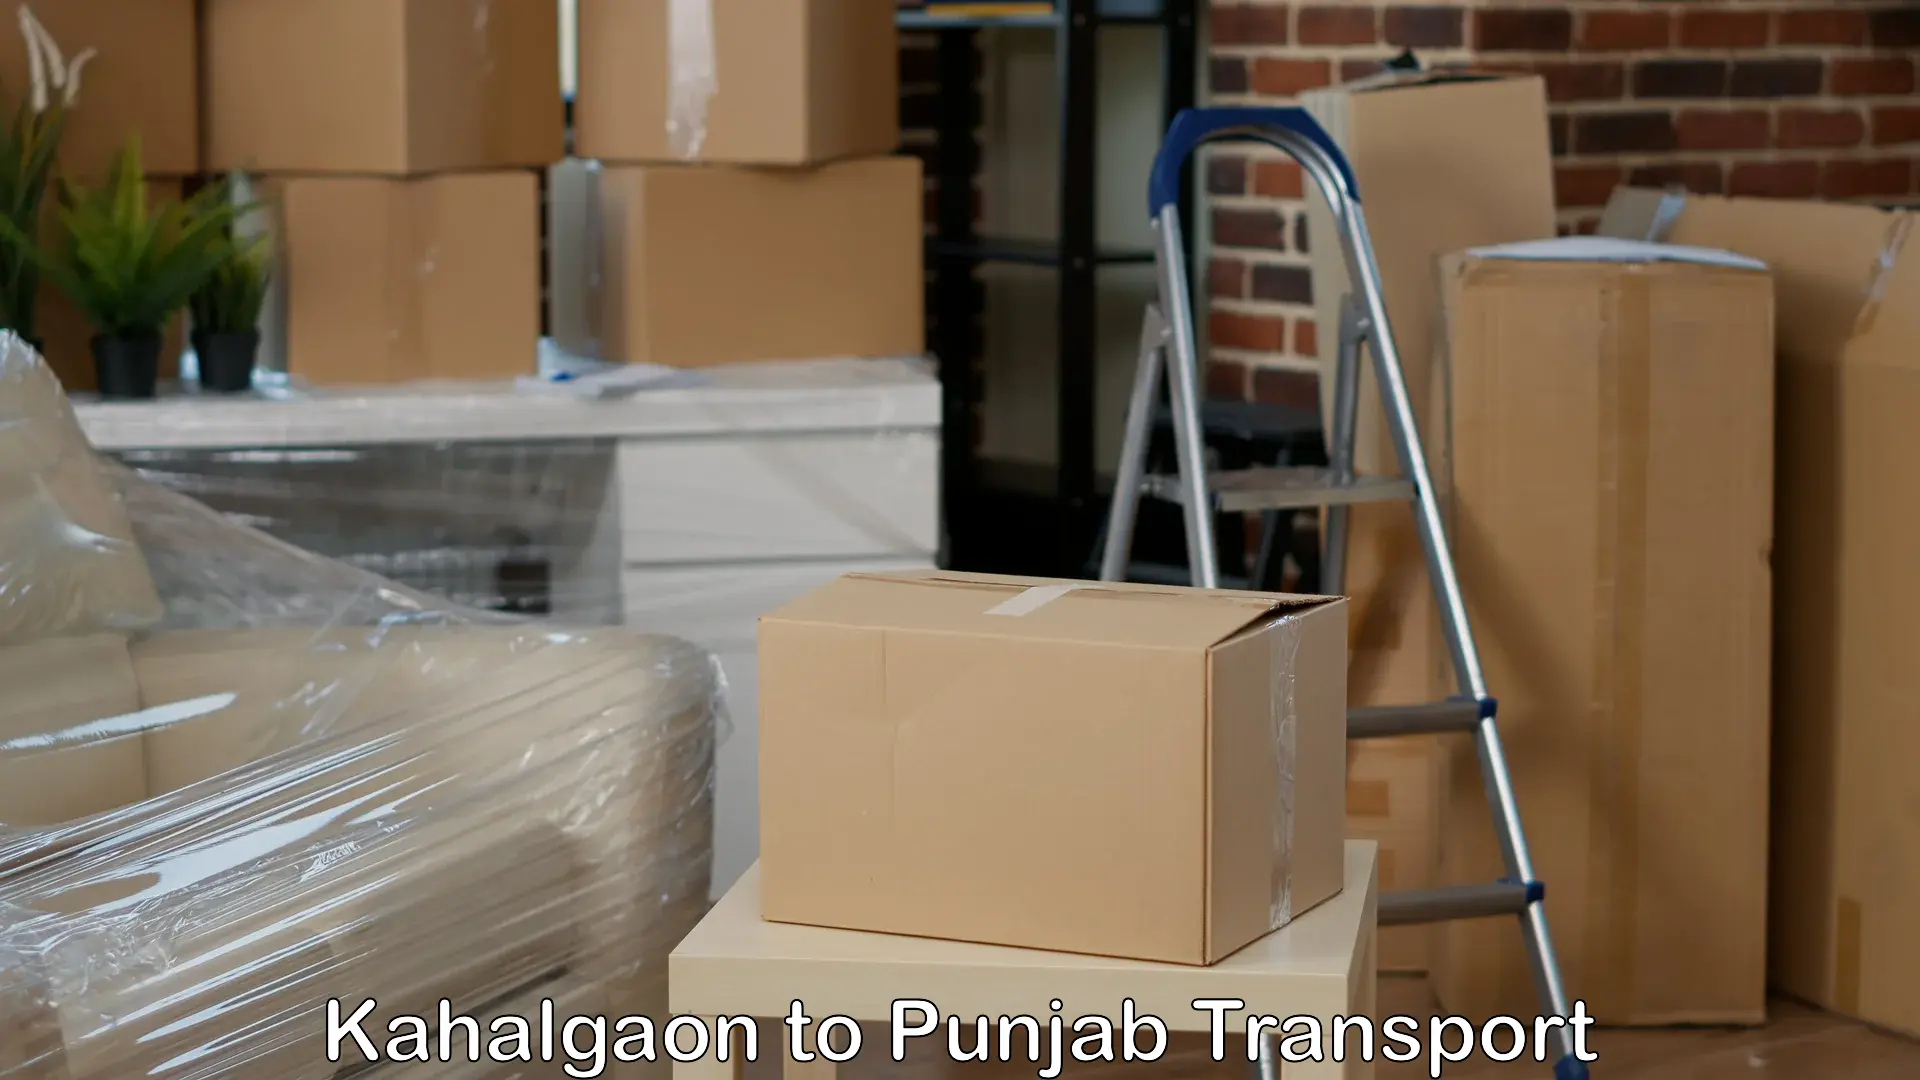 Truck transport companies in India Kahalgaon to Dhilwan